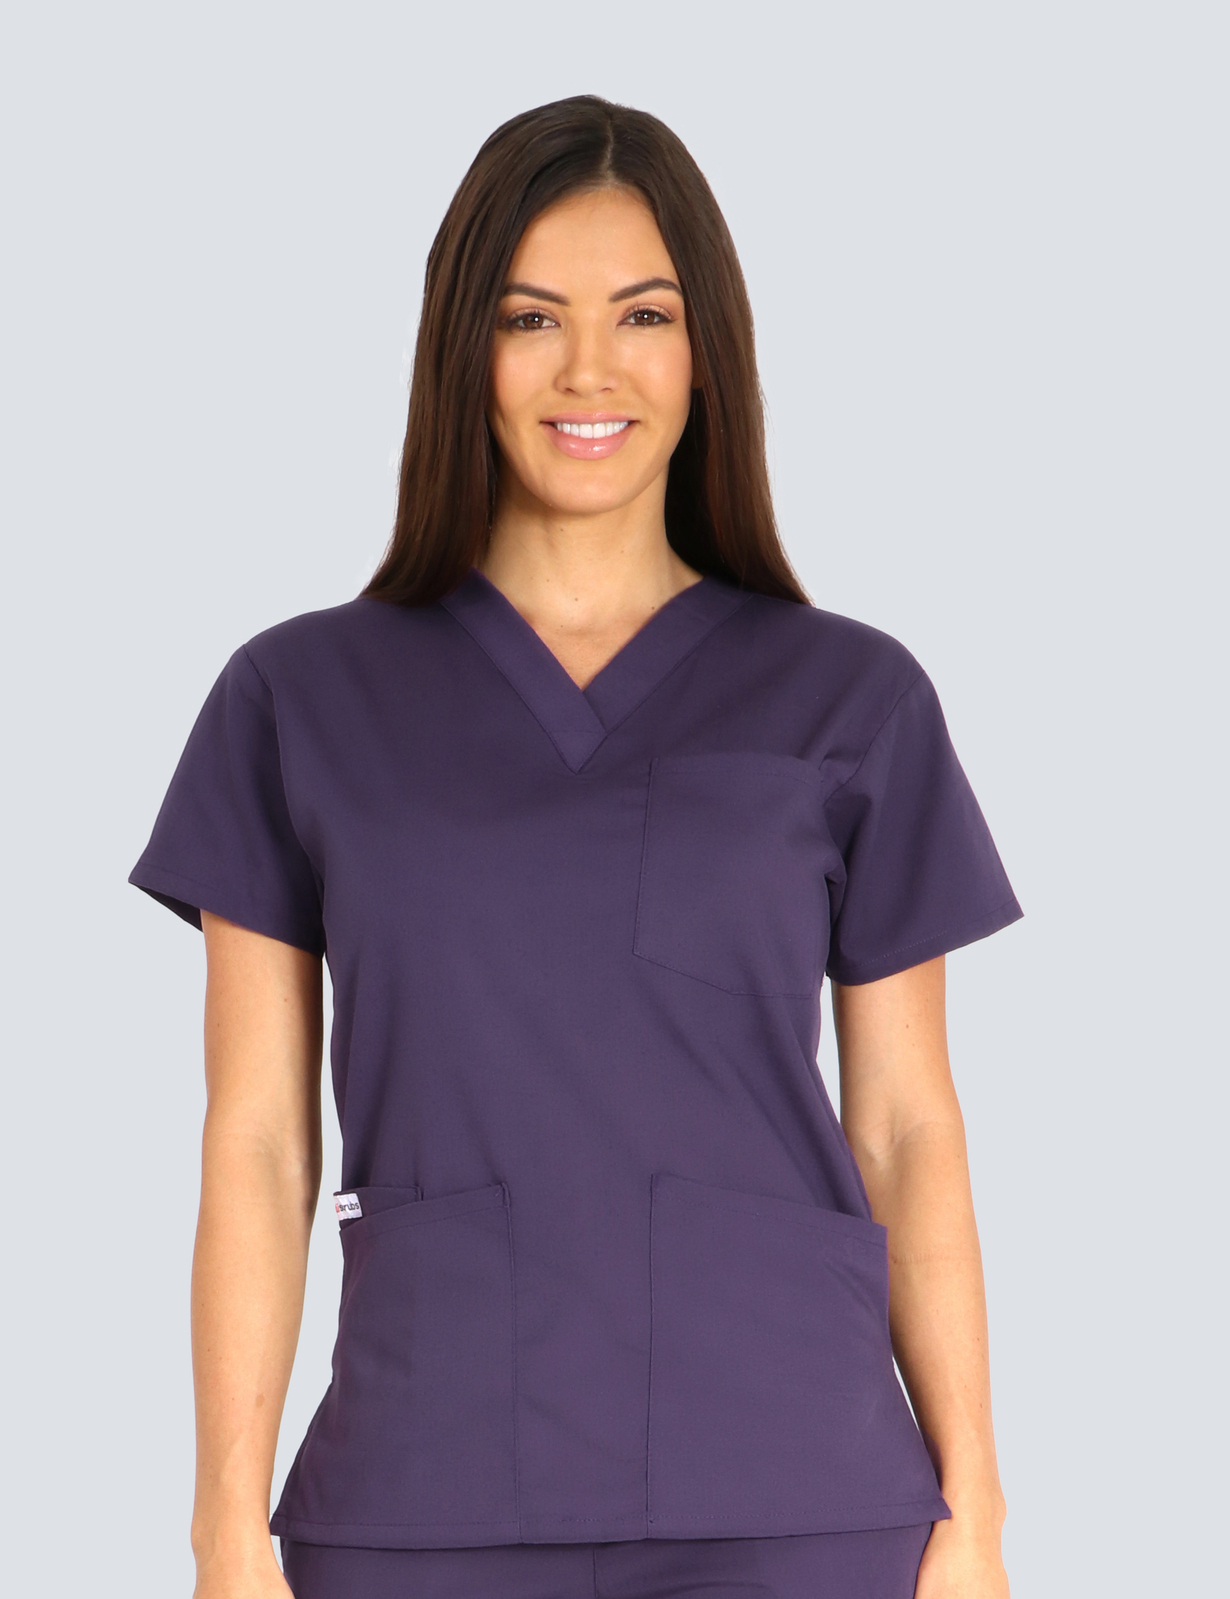 North Shore Private Hospital Nurse  Uniform Top Only Bundle (4 Pocket Top in Aubergine + Logo)